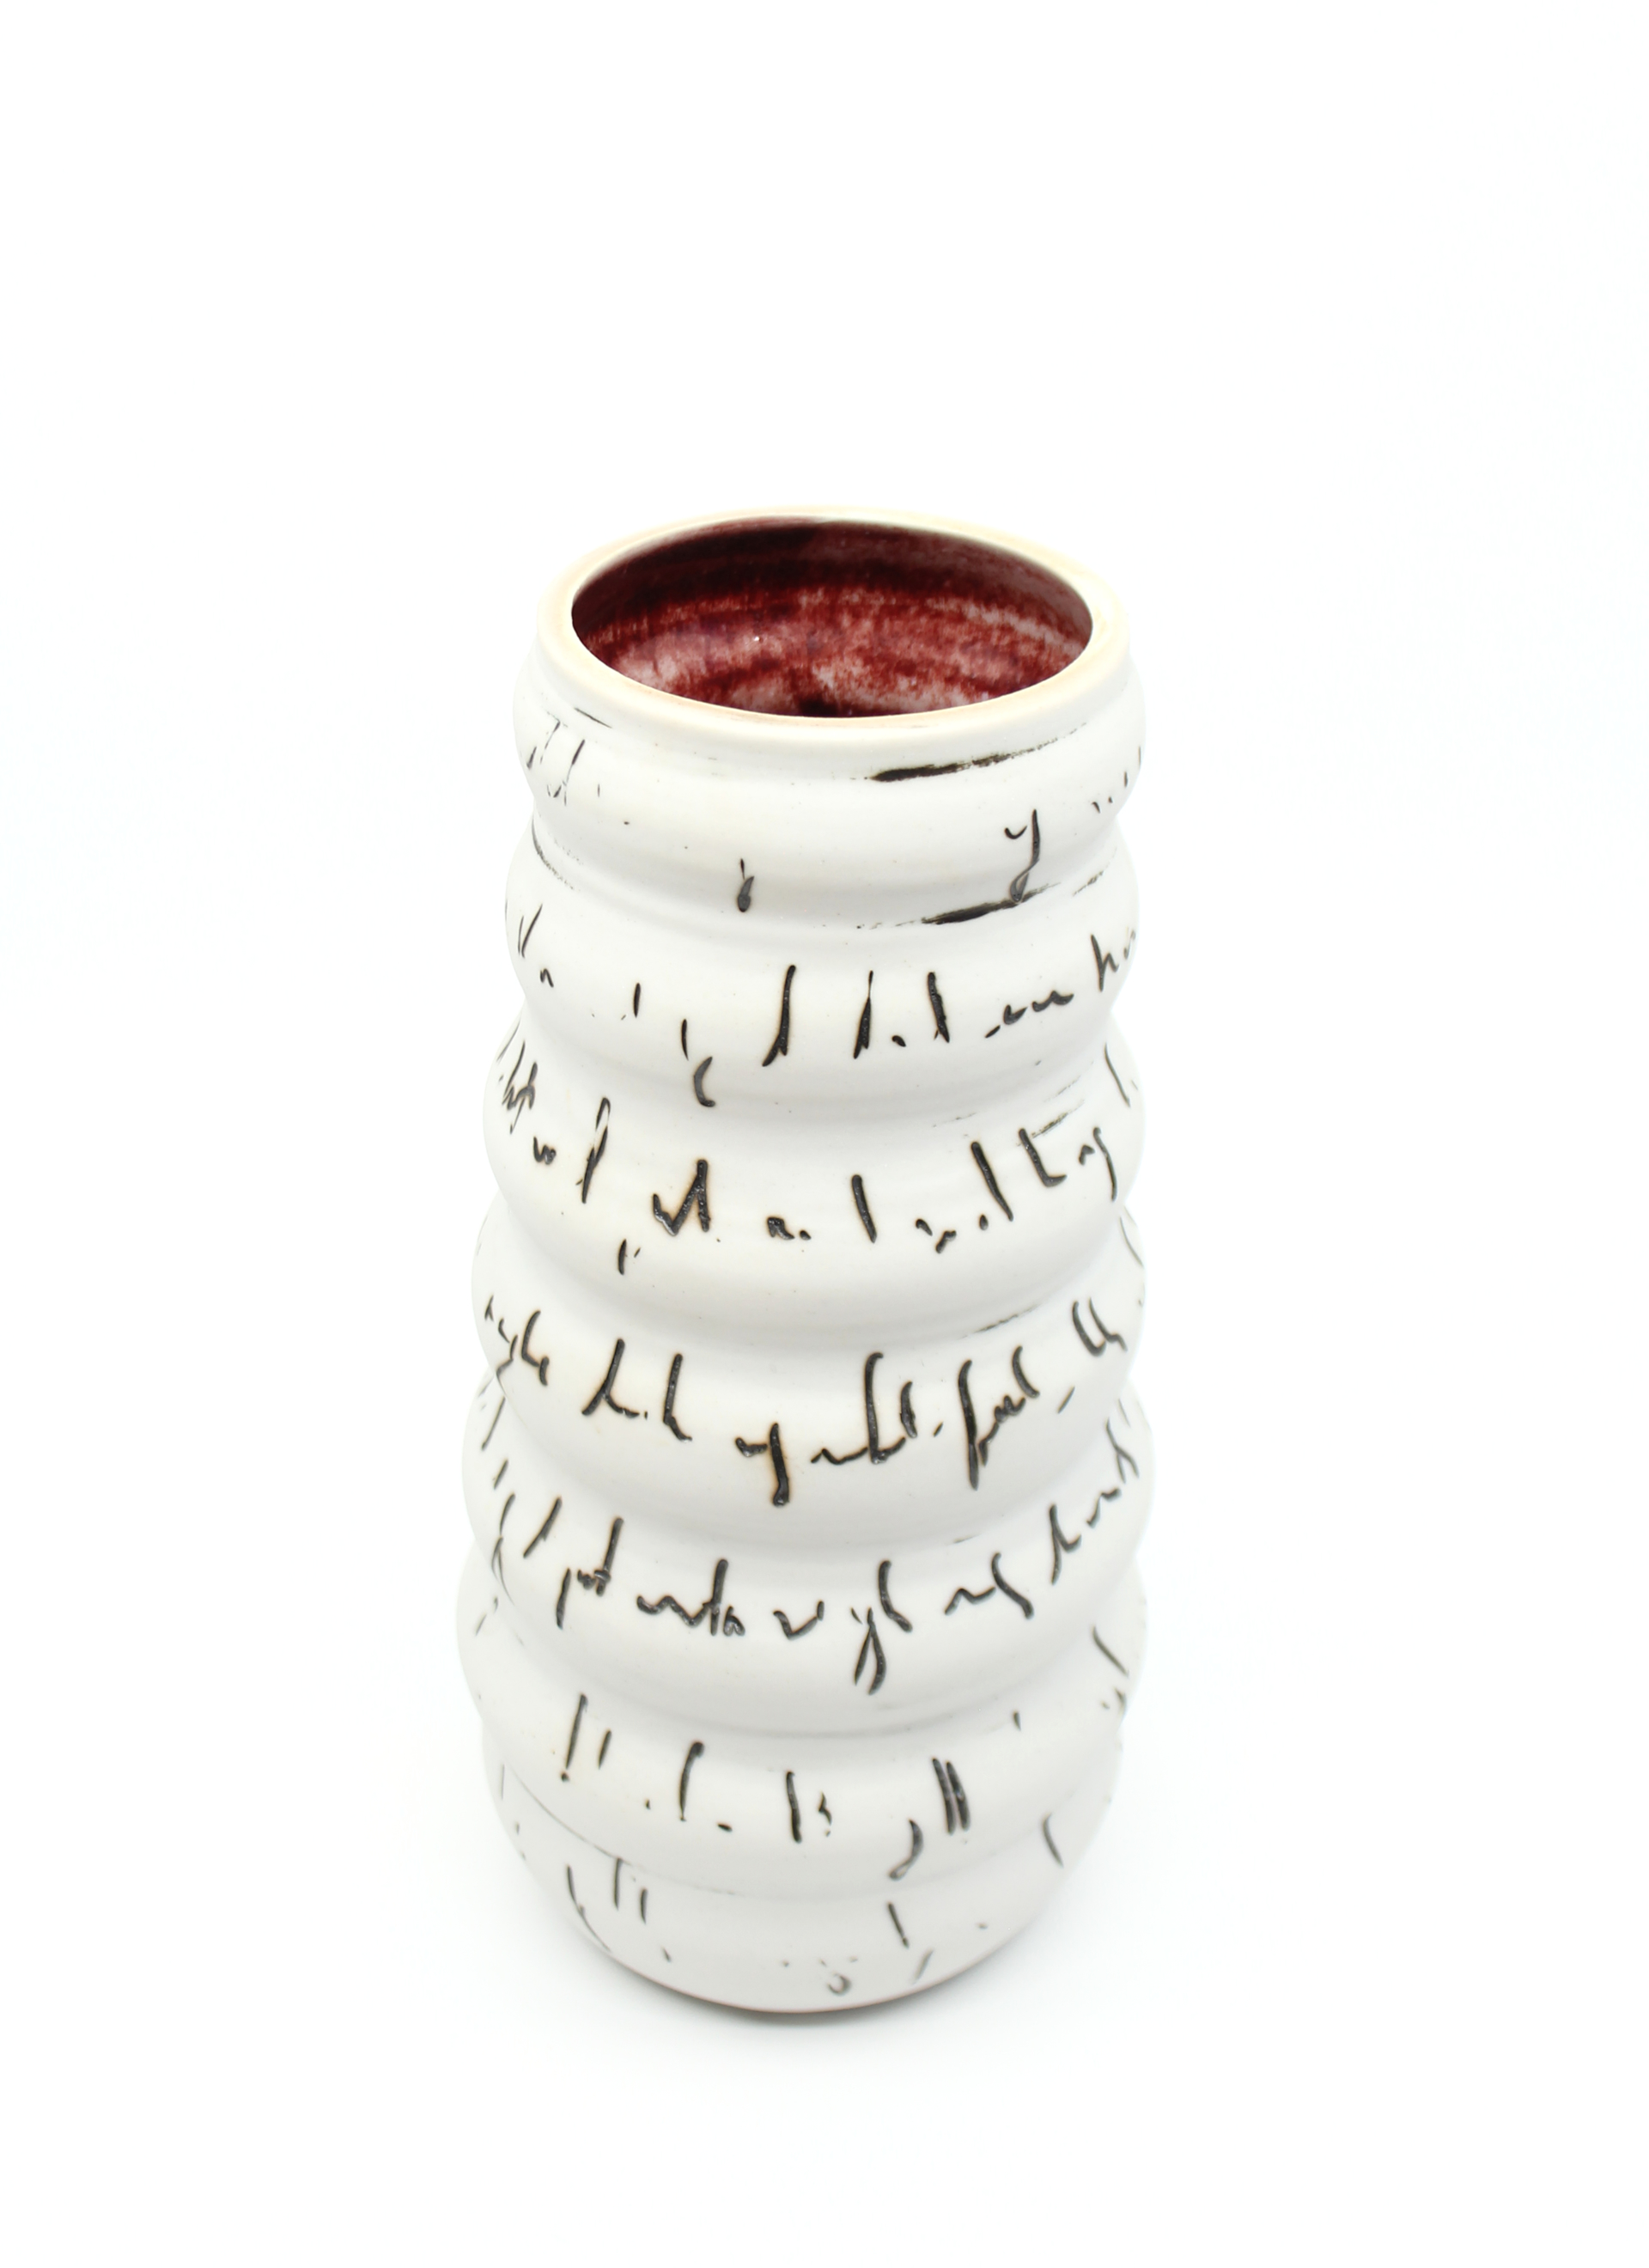 Writing Vase II by Heather Bradley